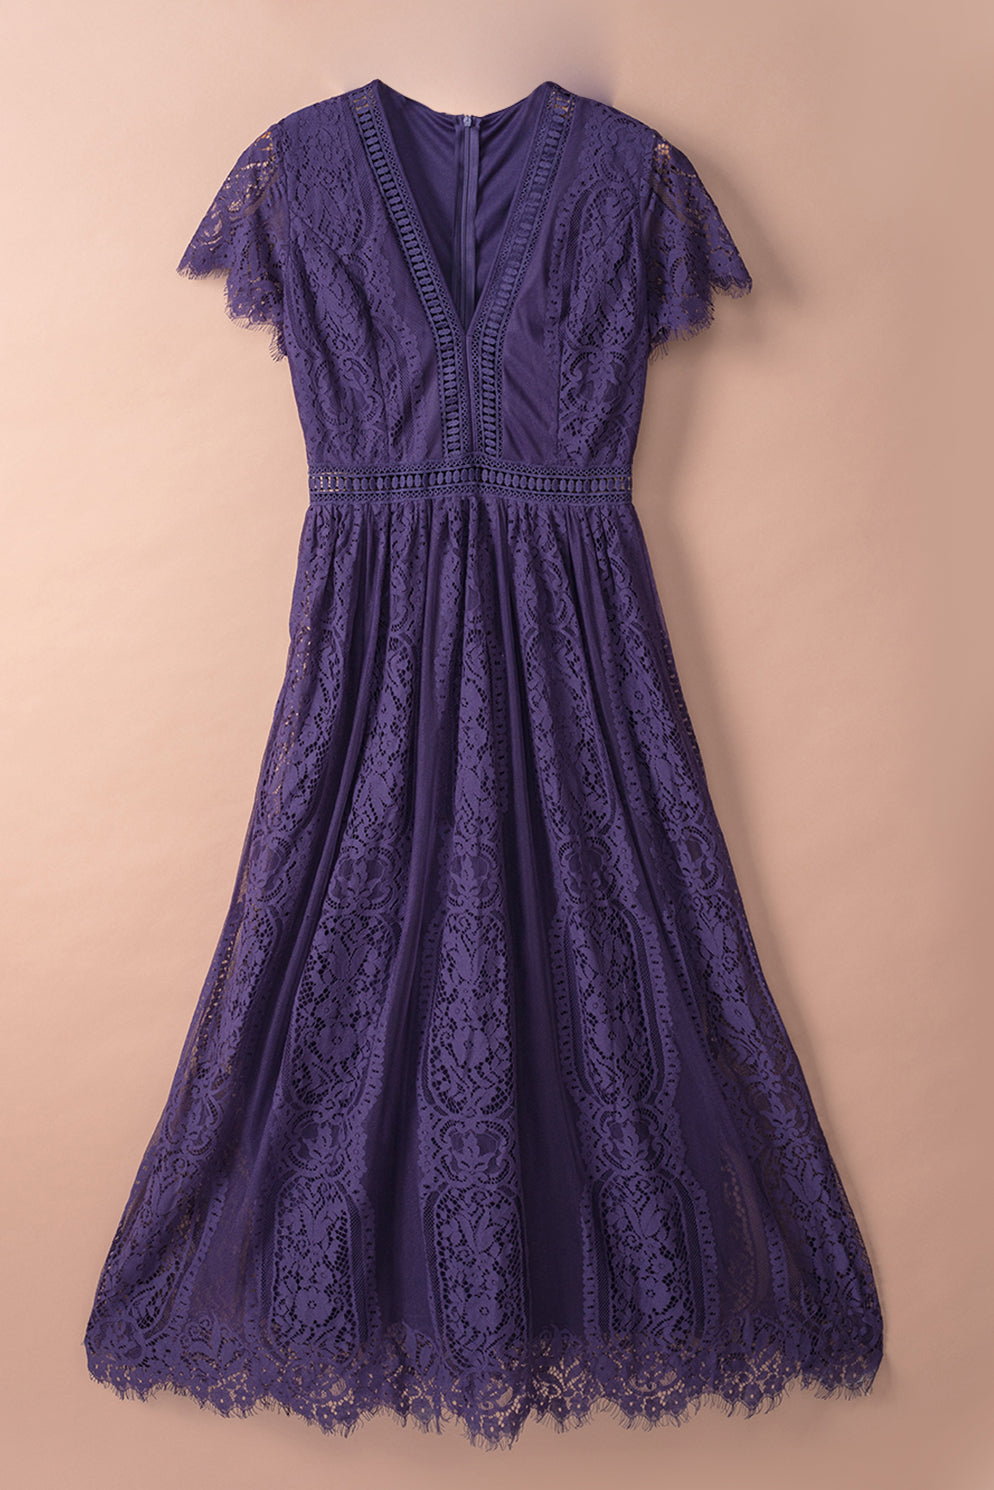 Elegant Short Sleeve Fill Your Heart Lace Maxi Formal Dress